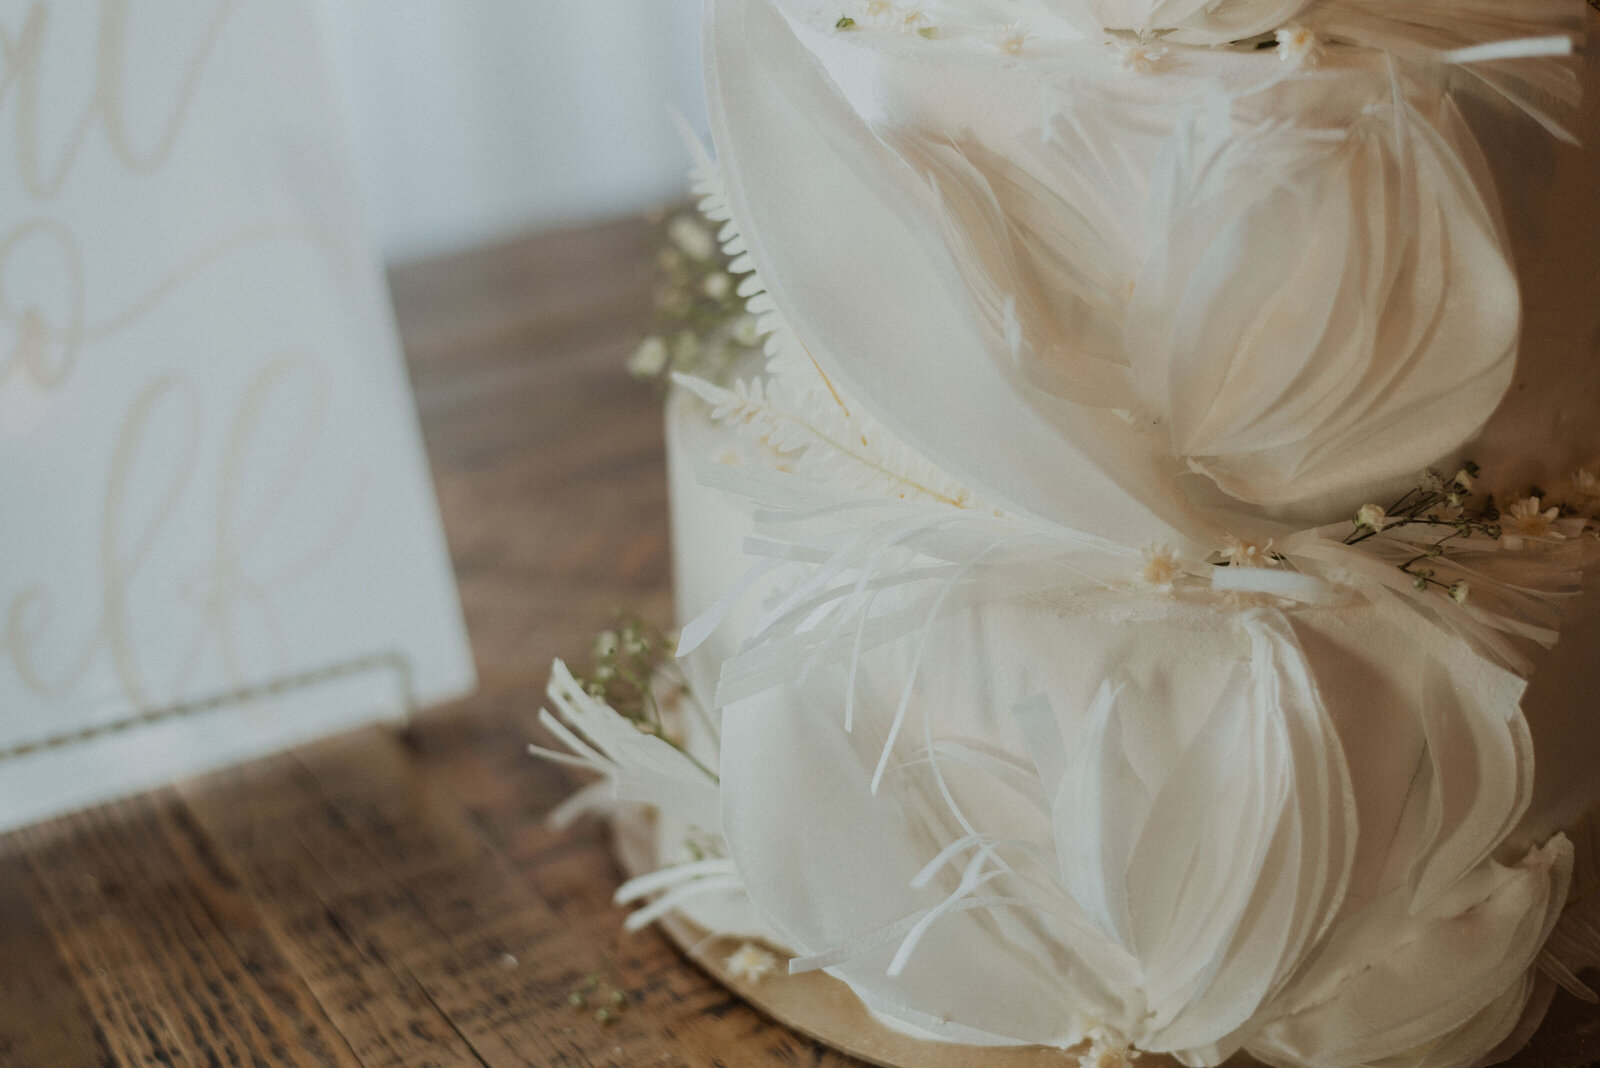 a decorative wedding cake